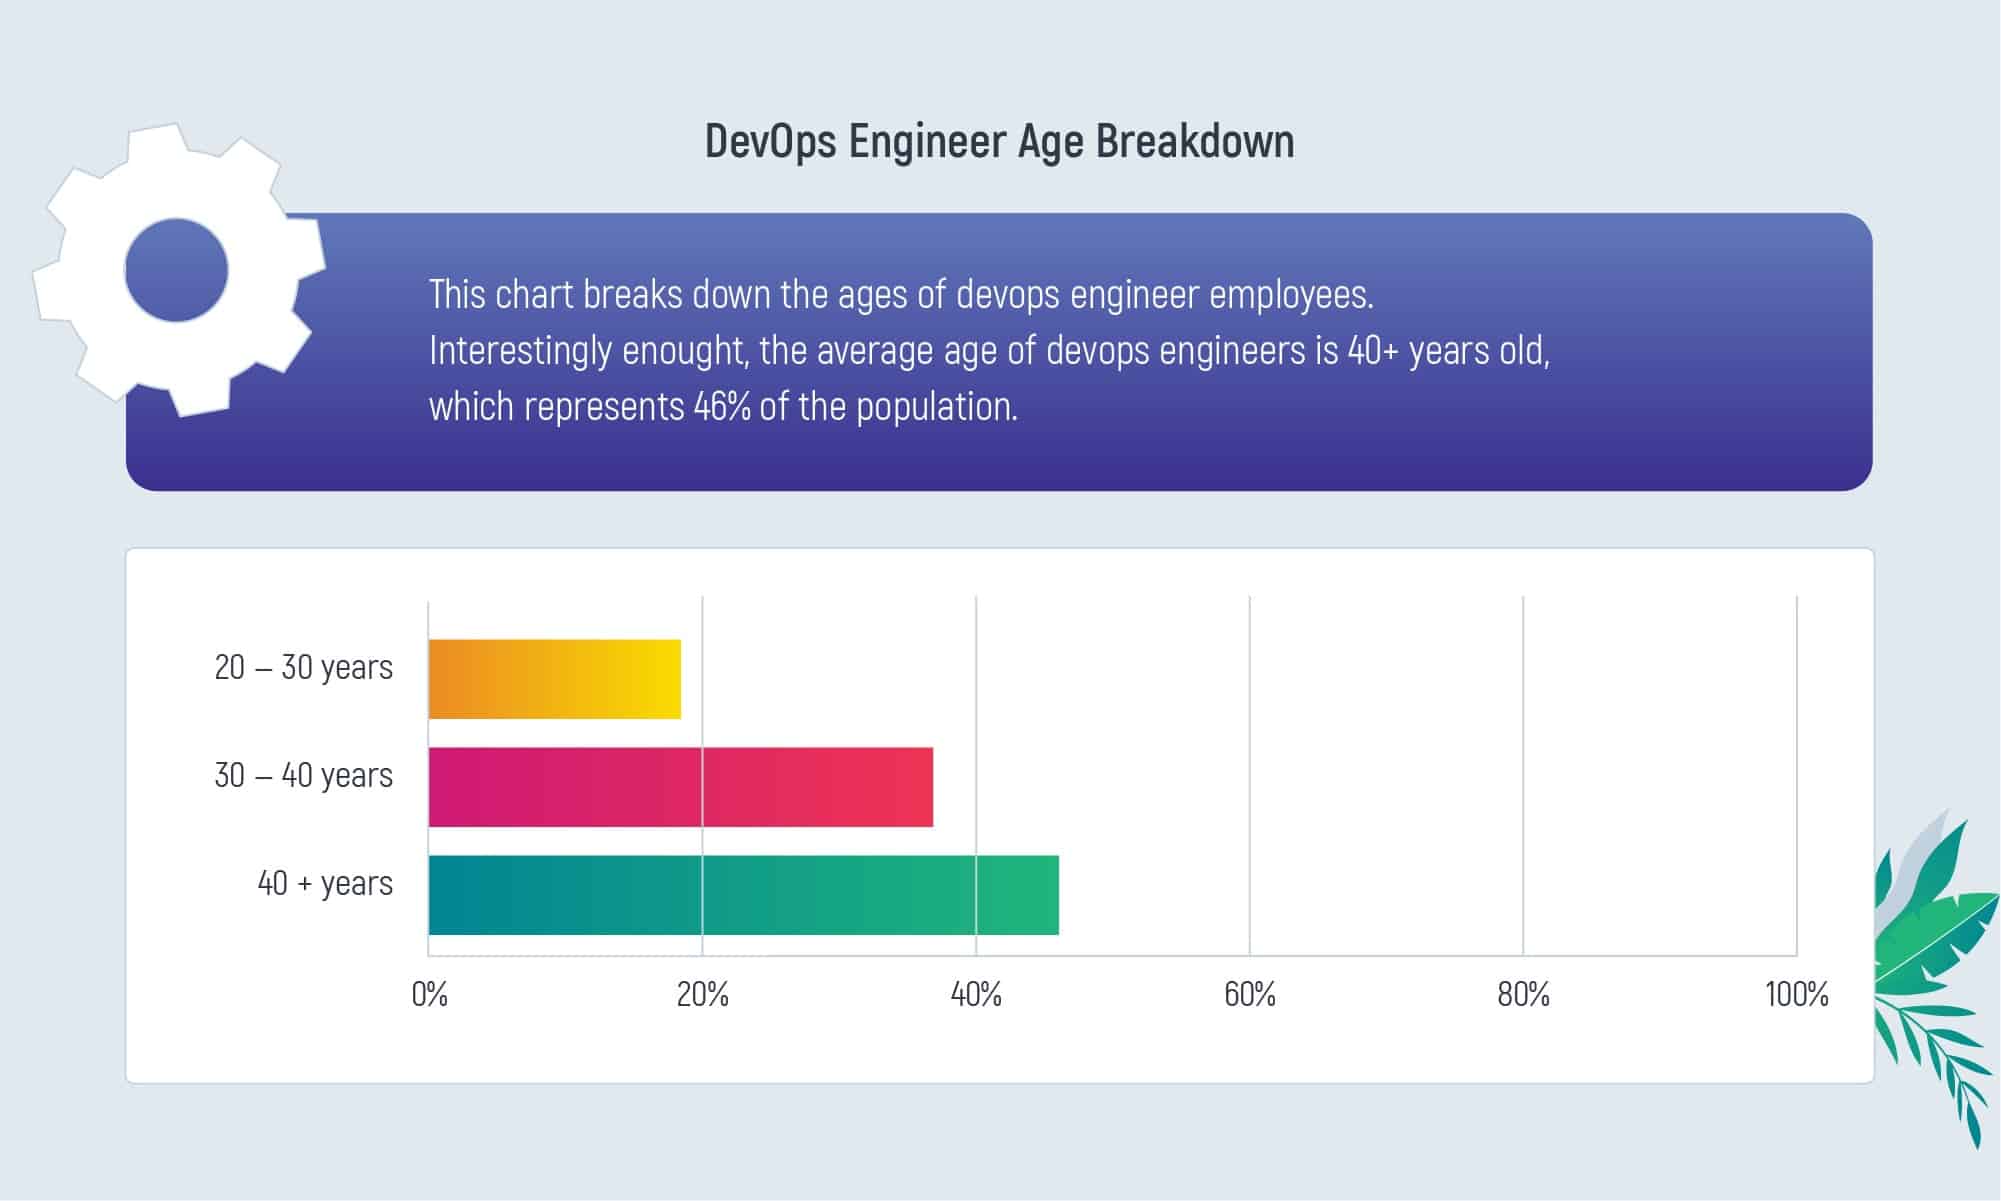 The chart of DevOps engineer age breakdown